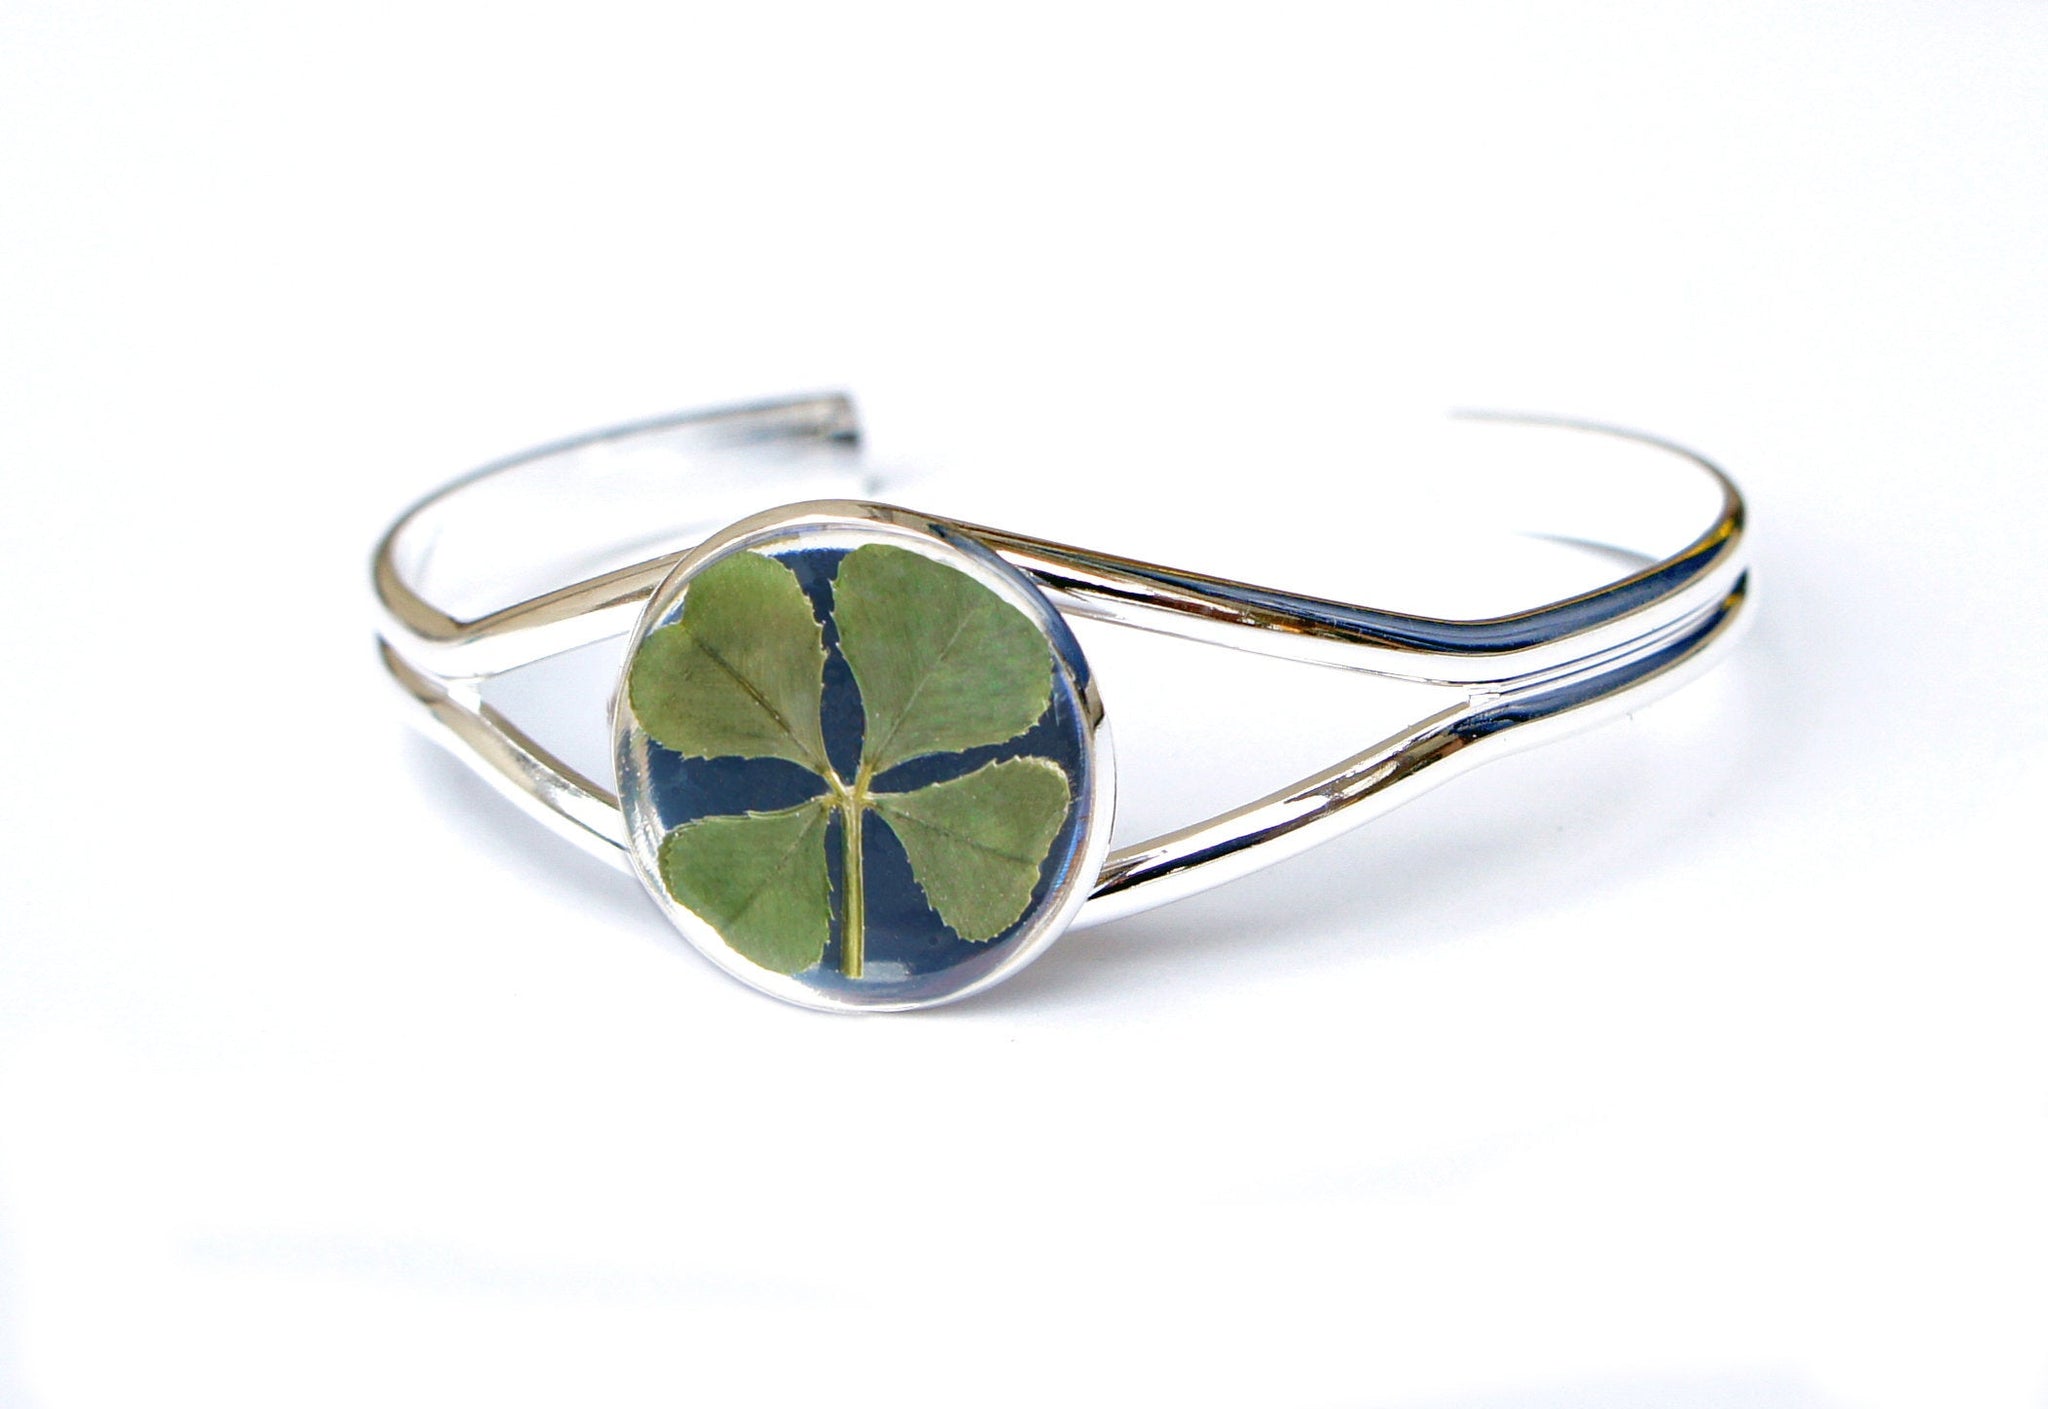 Irish Four Leaf Clover + Stainless Steel + Charm Bracelets